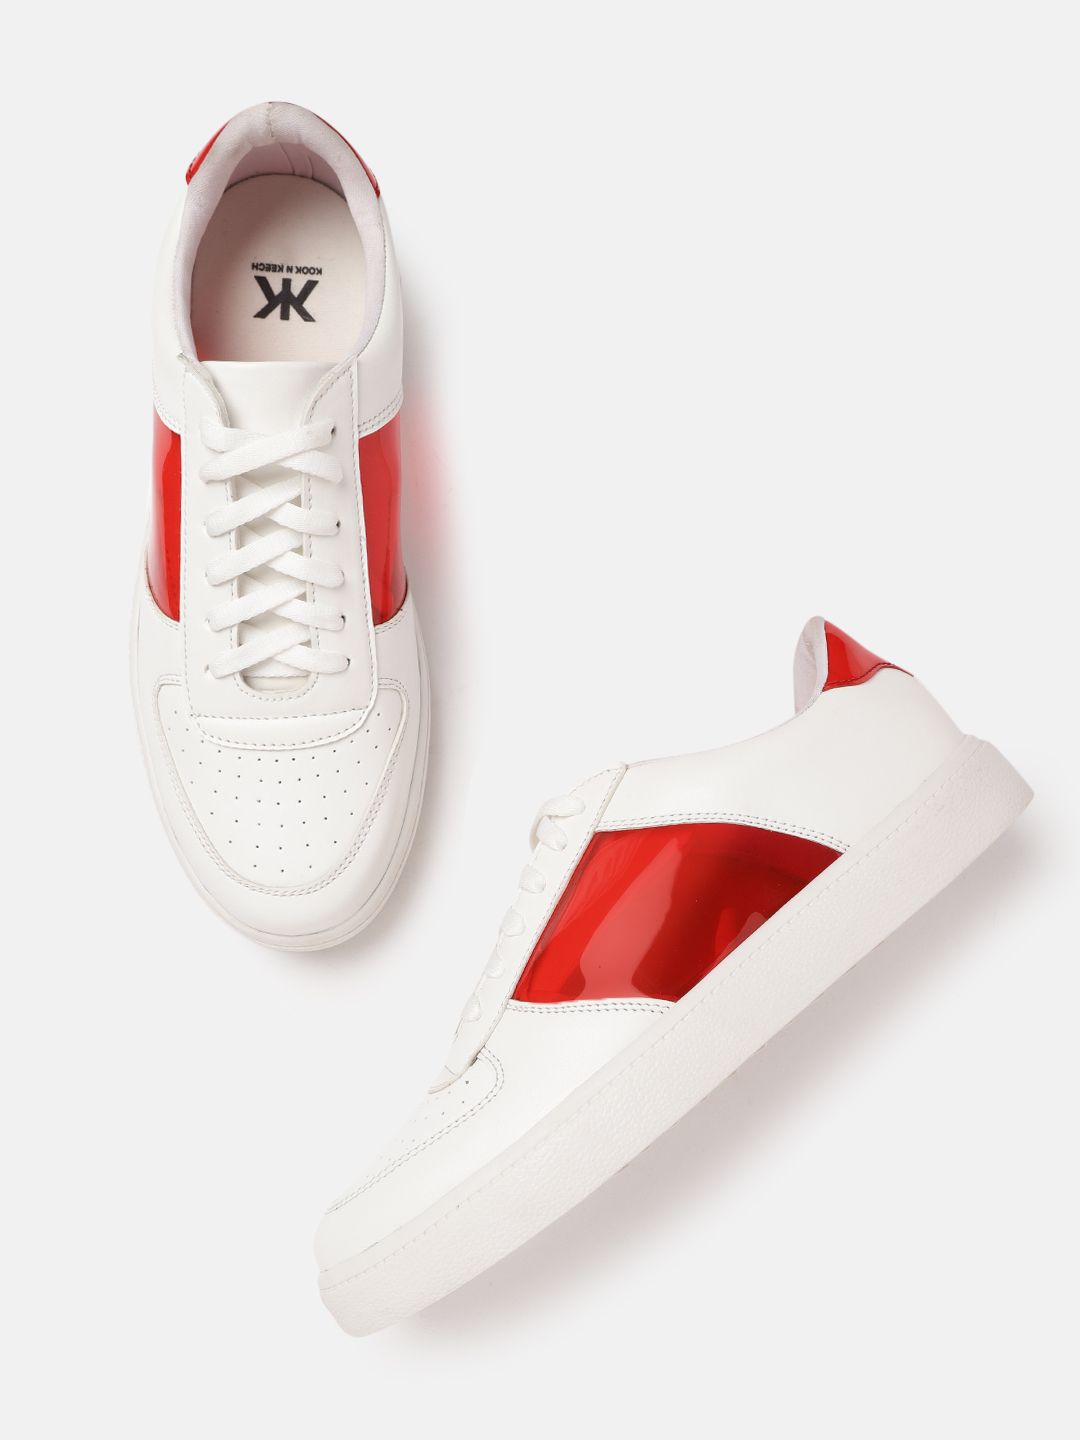 Kook N Keech Women White & Red Colourblocked Sneakers Price in India